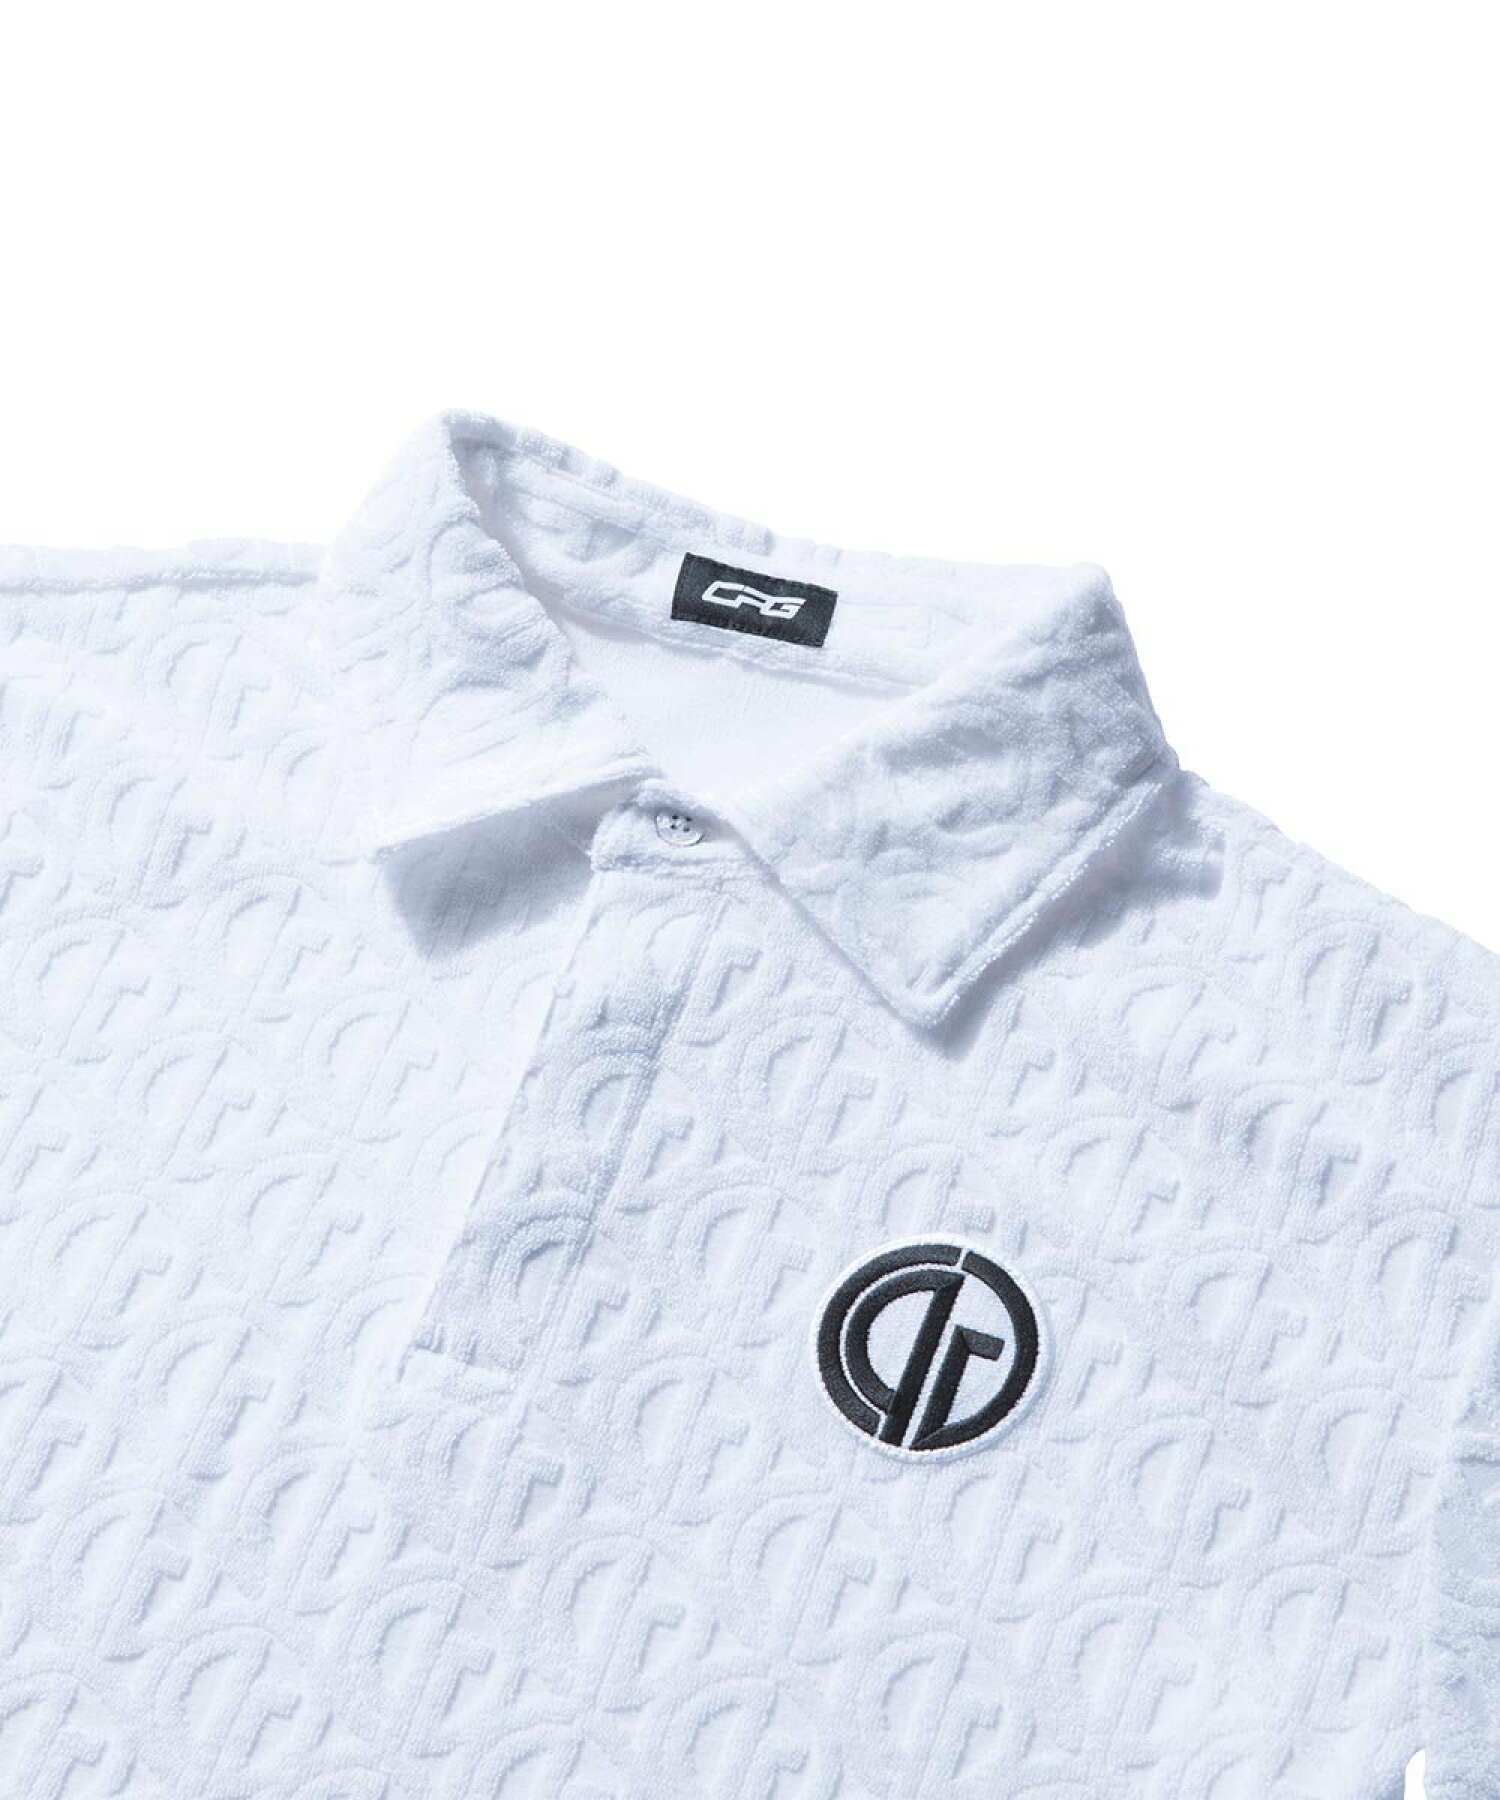 Pile jacquard polo shirt(パイルジャガードポロシャツ)|MEN